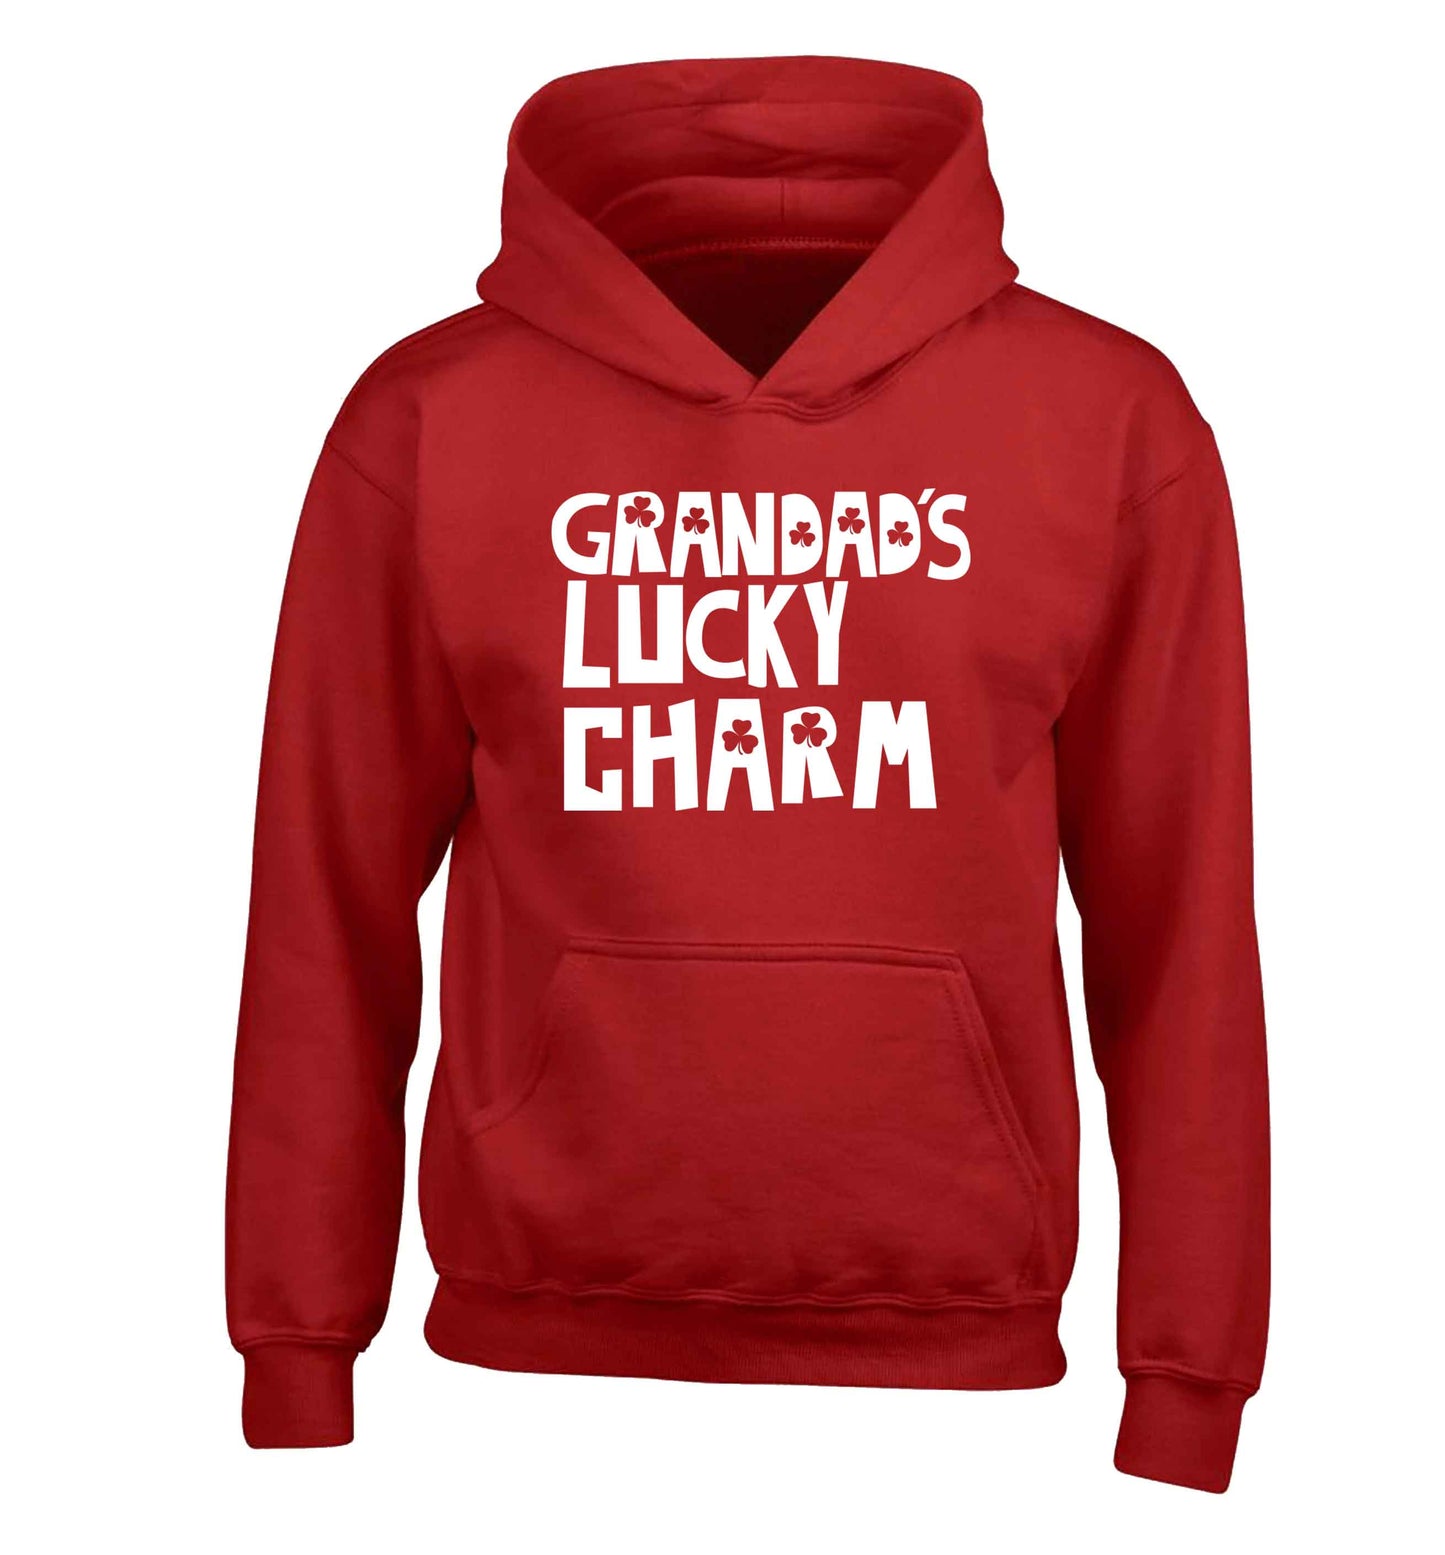 Grandad's lucky charm  children's red hoodie 12-13 Years